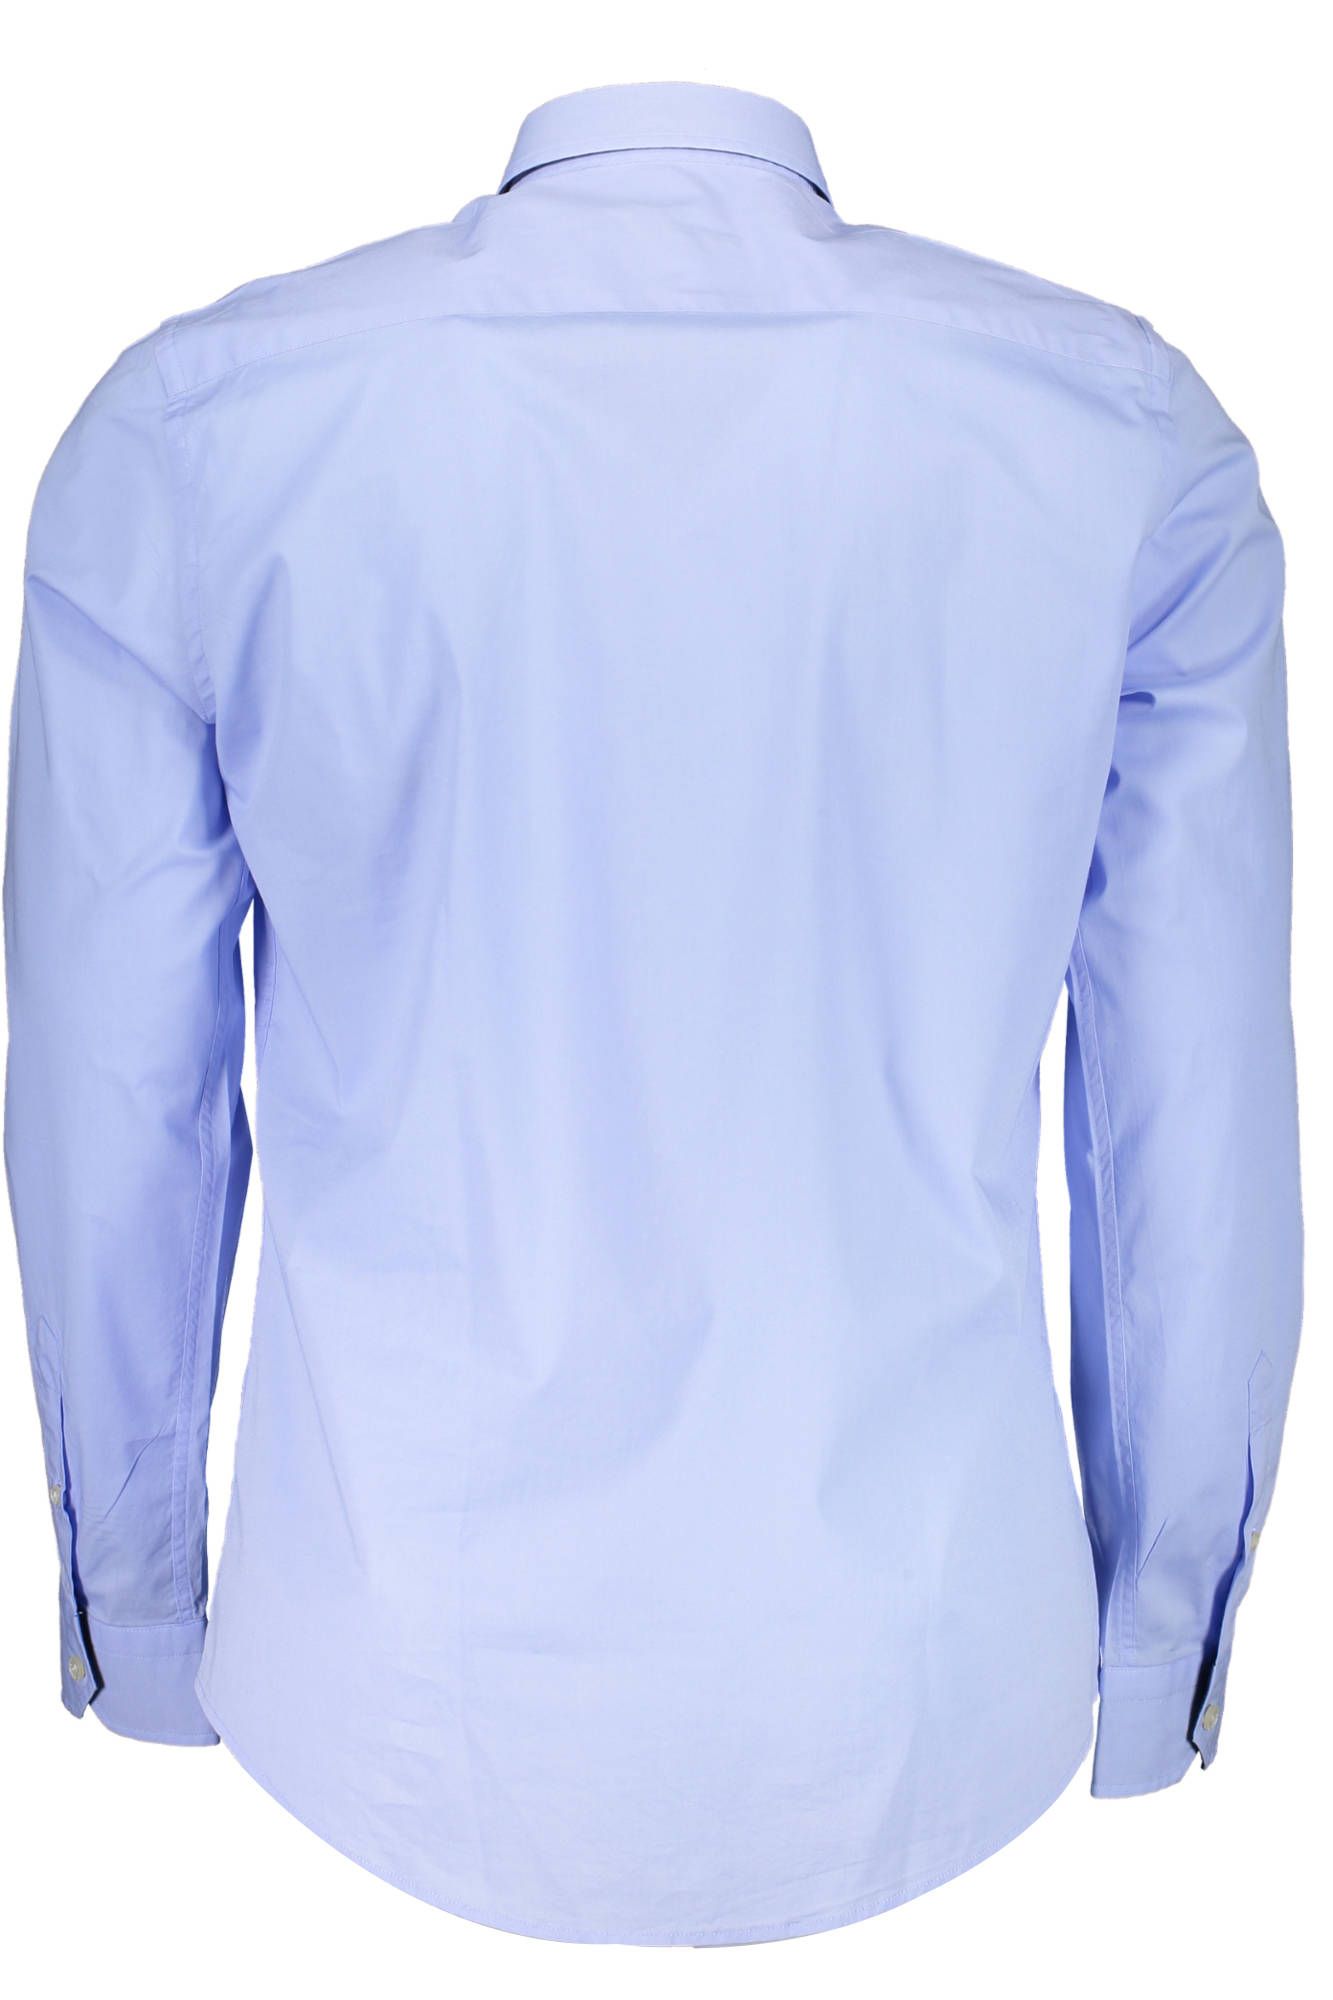 Elegant Light Blue Cotton Blend Shirt